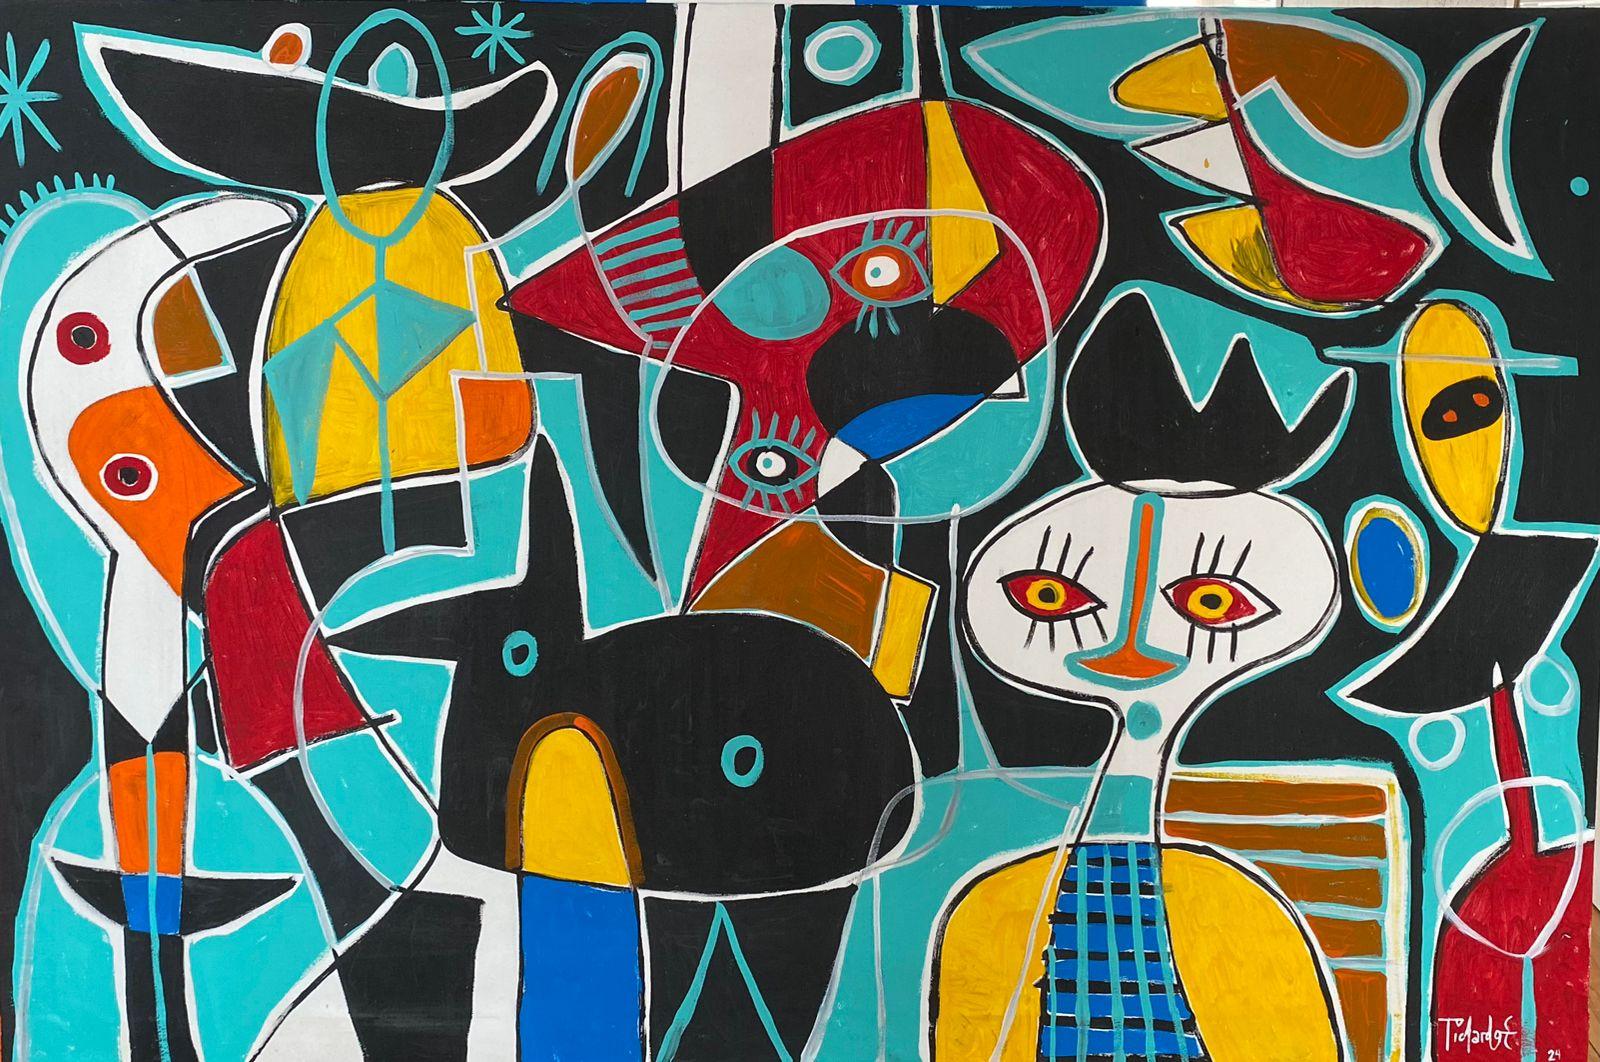 Contemporary Art, Abstract Painting
Acrylic on canvas
83x120cm
Signed 




About the artist
Enrique Pichardo (Mexico City, 1973) graduated from Escuela Nacional de Pintura, Escultura y Grabado (ENPEG) “La Esmeralda”. As a Mexican Contemporary